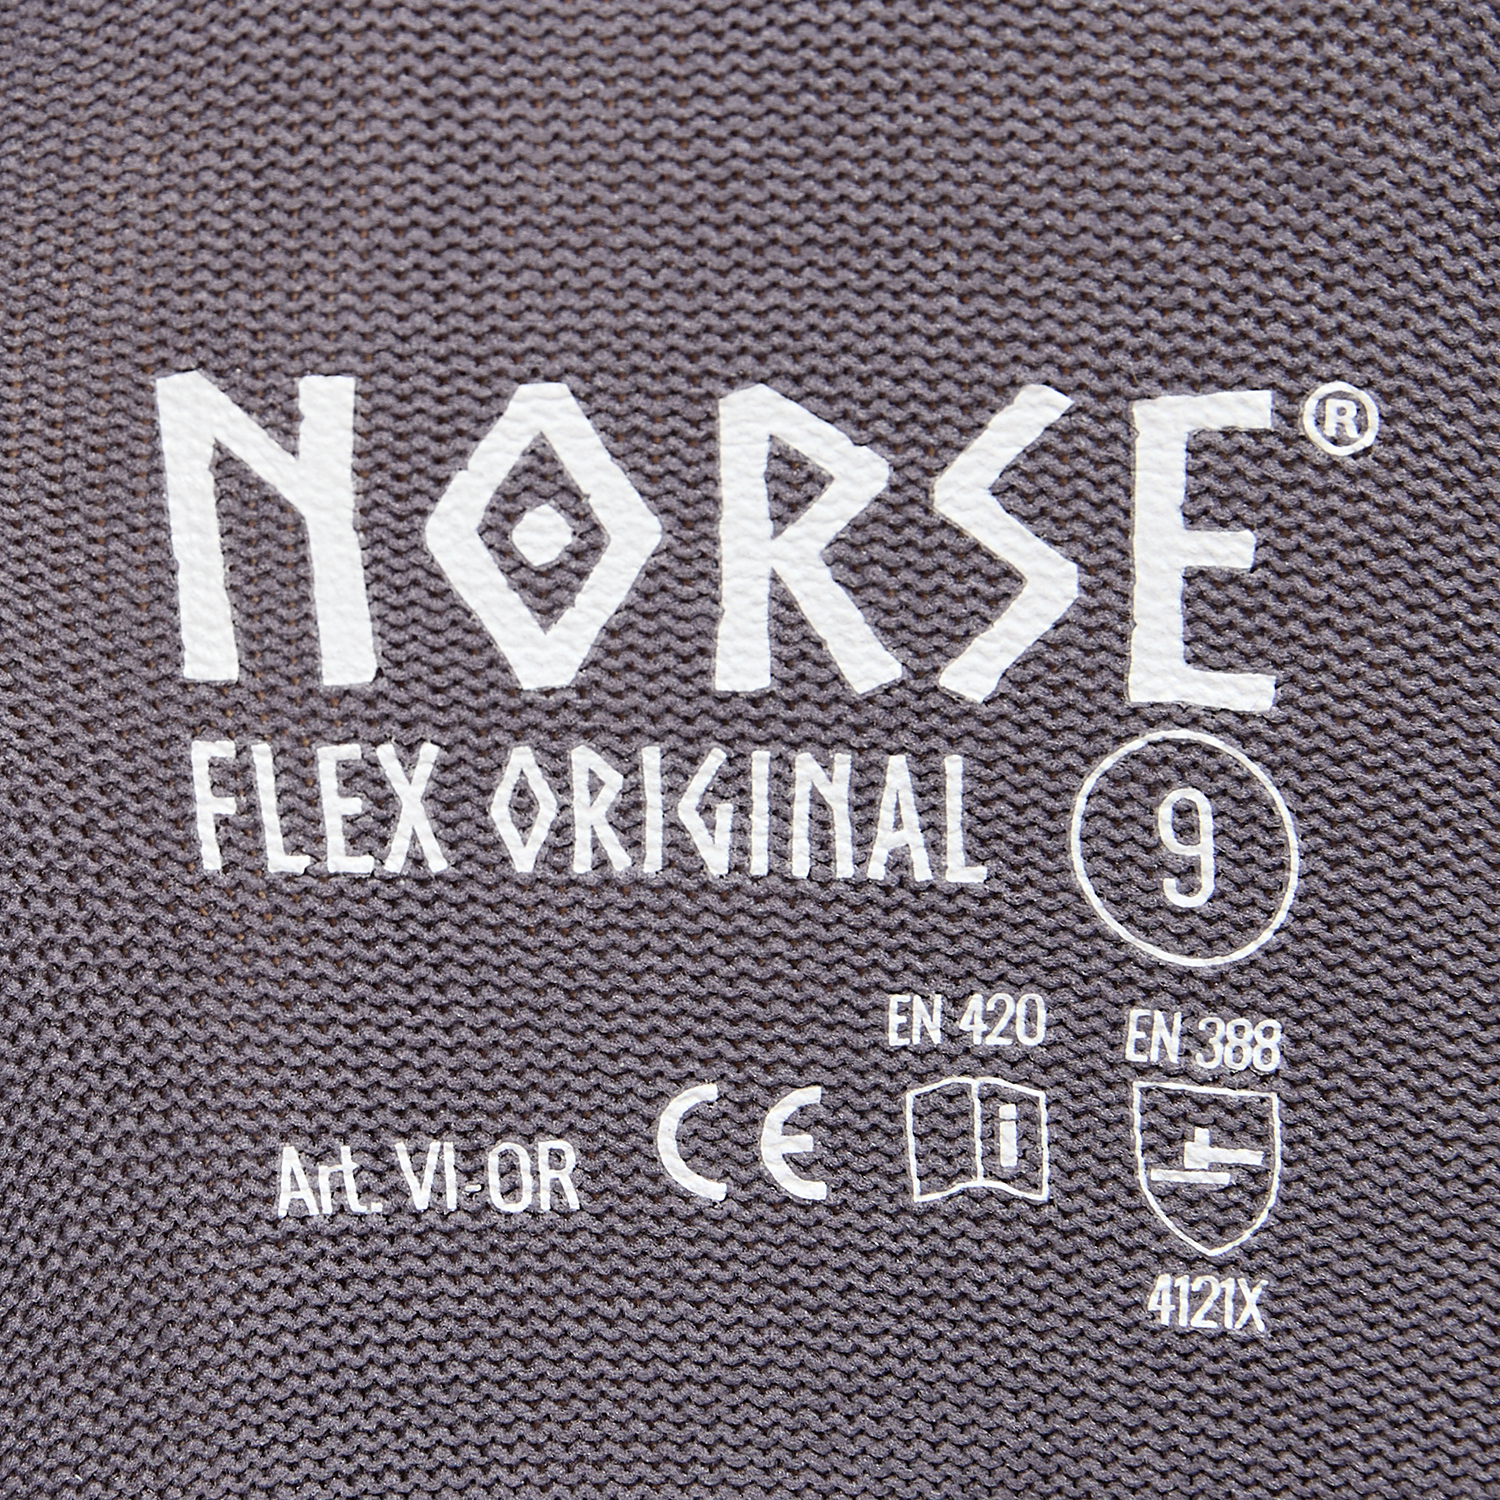 NORSE Flex Original kokoonpanohanskat koko 11